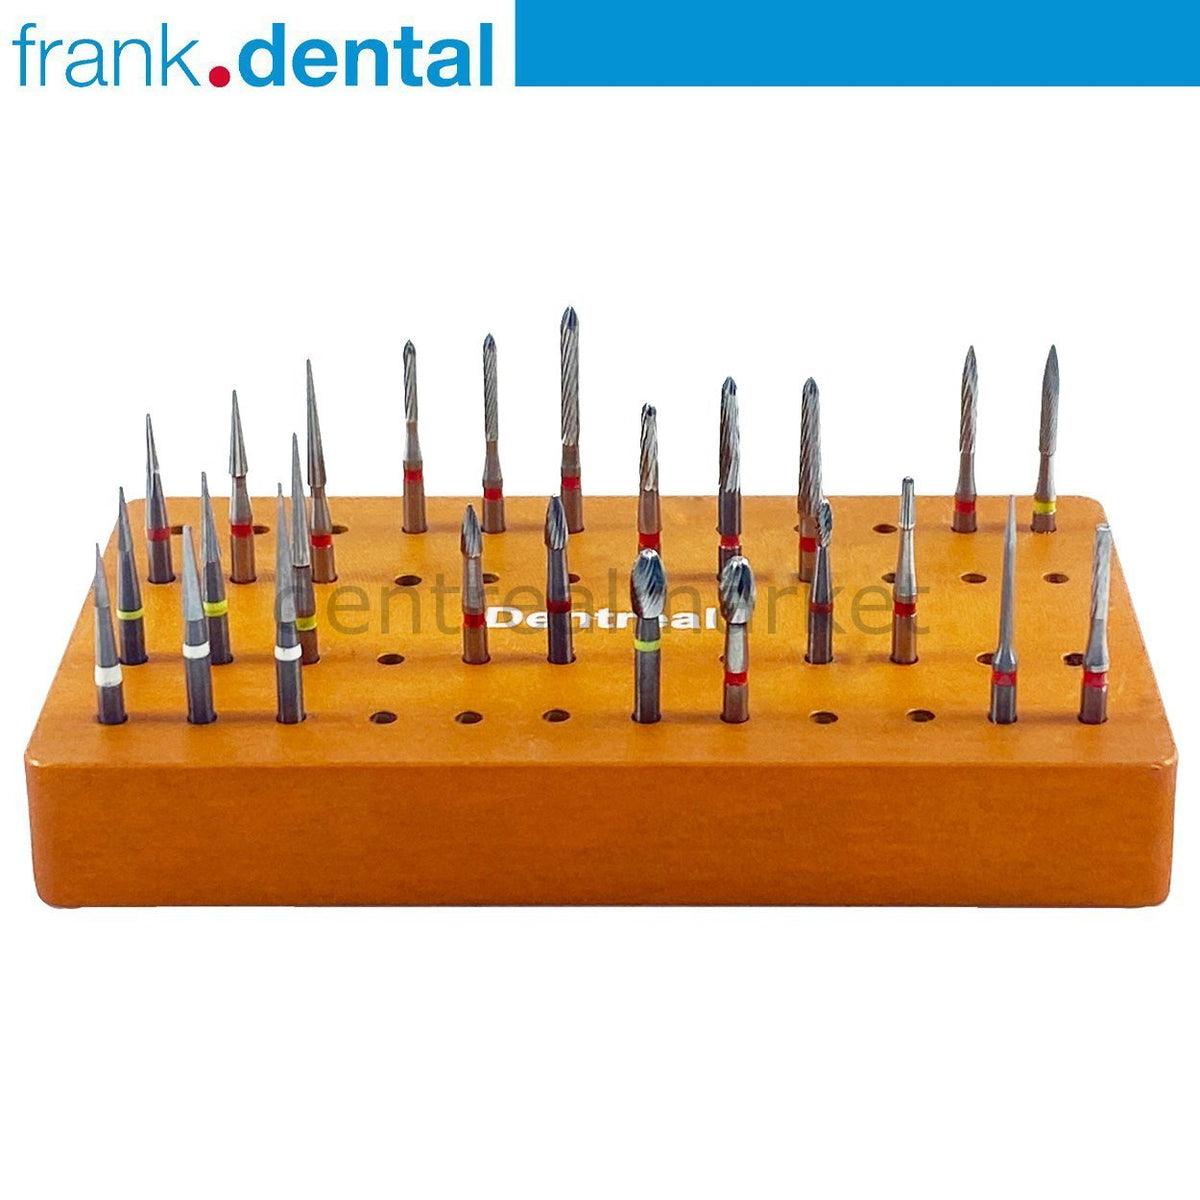 DentrealStore - Frank Dental Orthodontic Adhesive Remover & Debonding Bur Kit